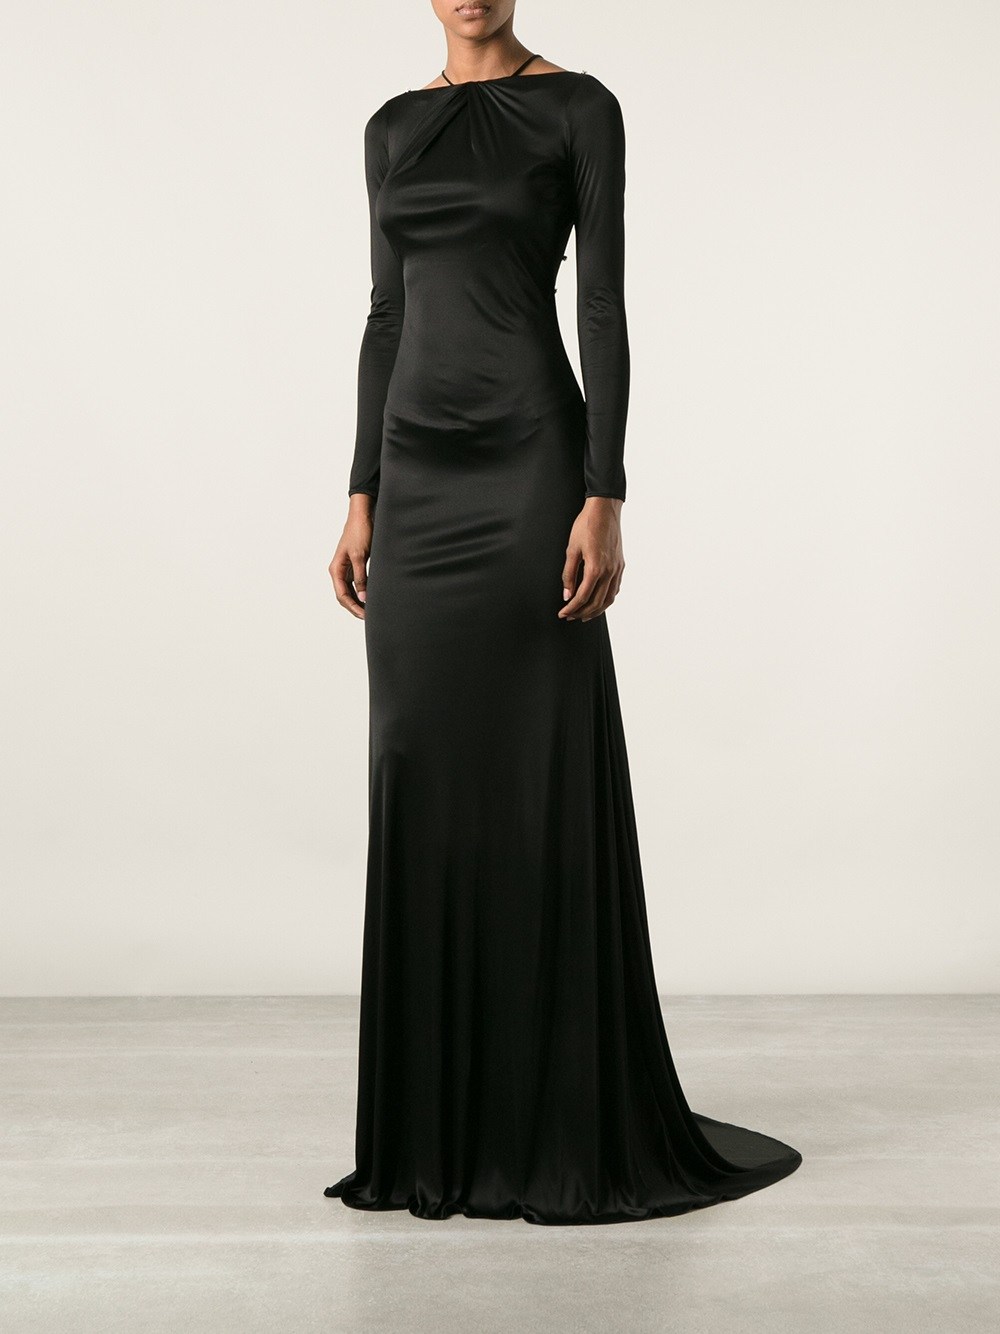 Roberto cavalli Snake Back Evening Dress in Black | Lyst